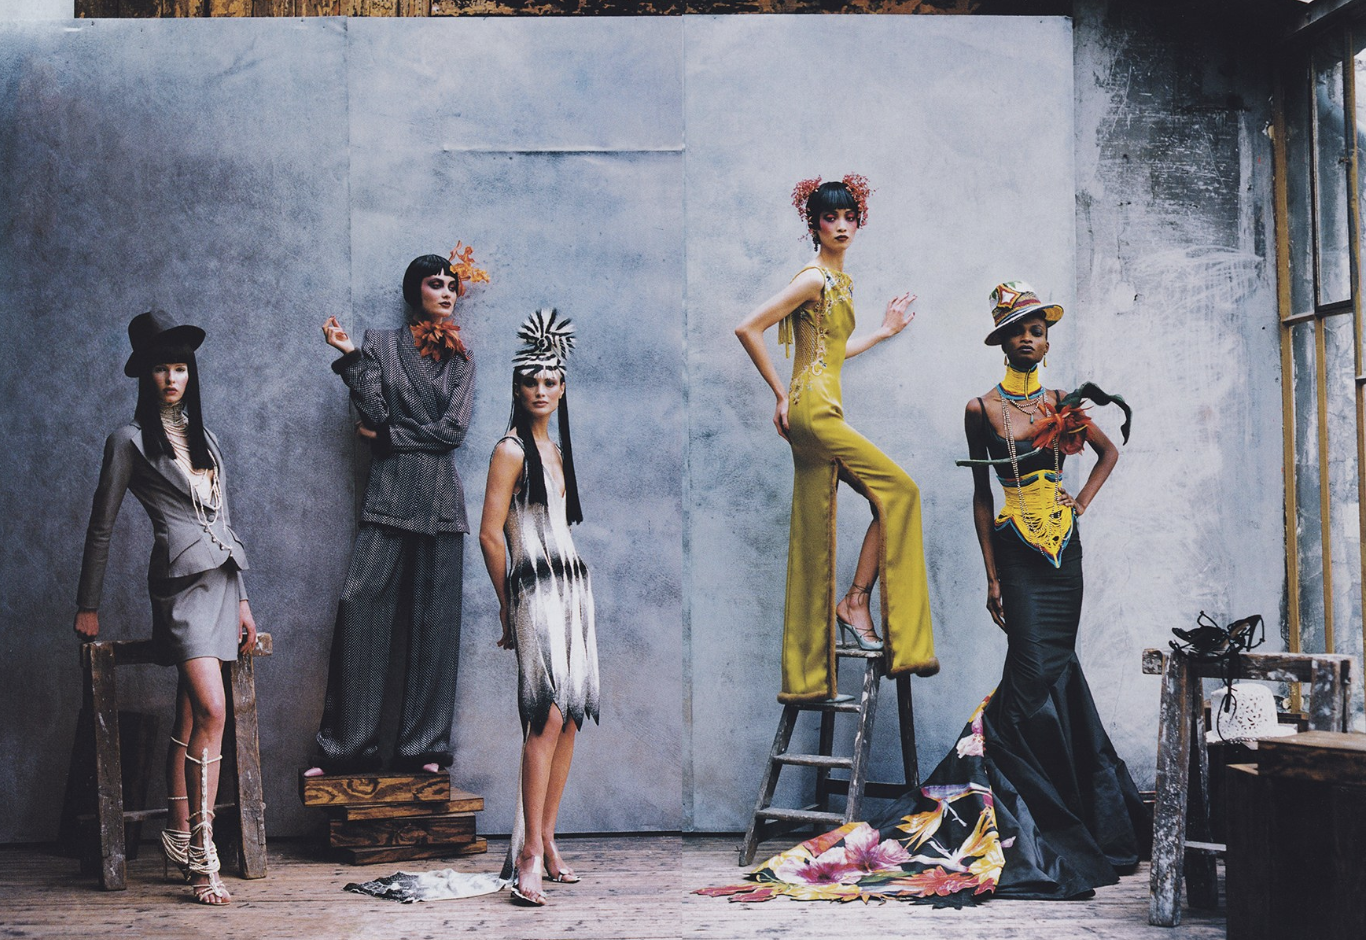 John Galliano delivers subtle style on Paris Fashion Week - China